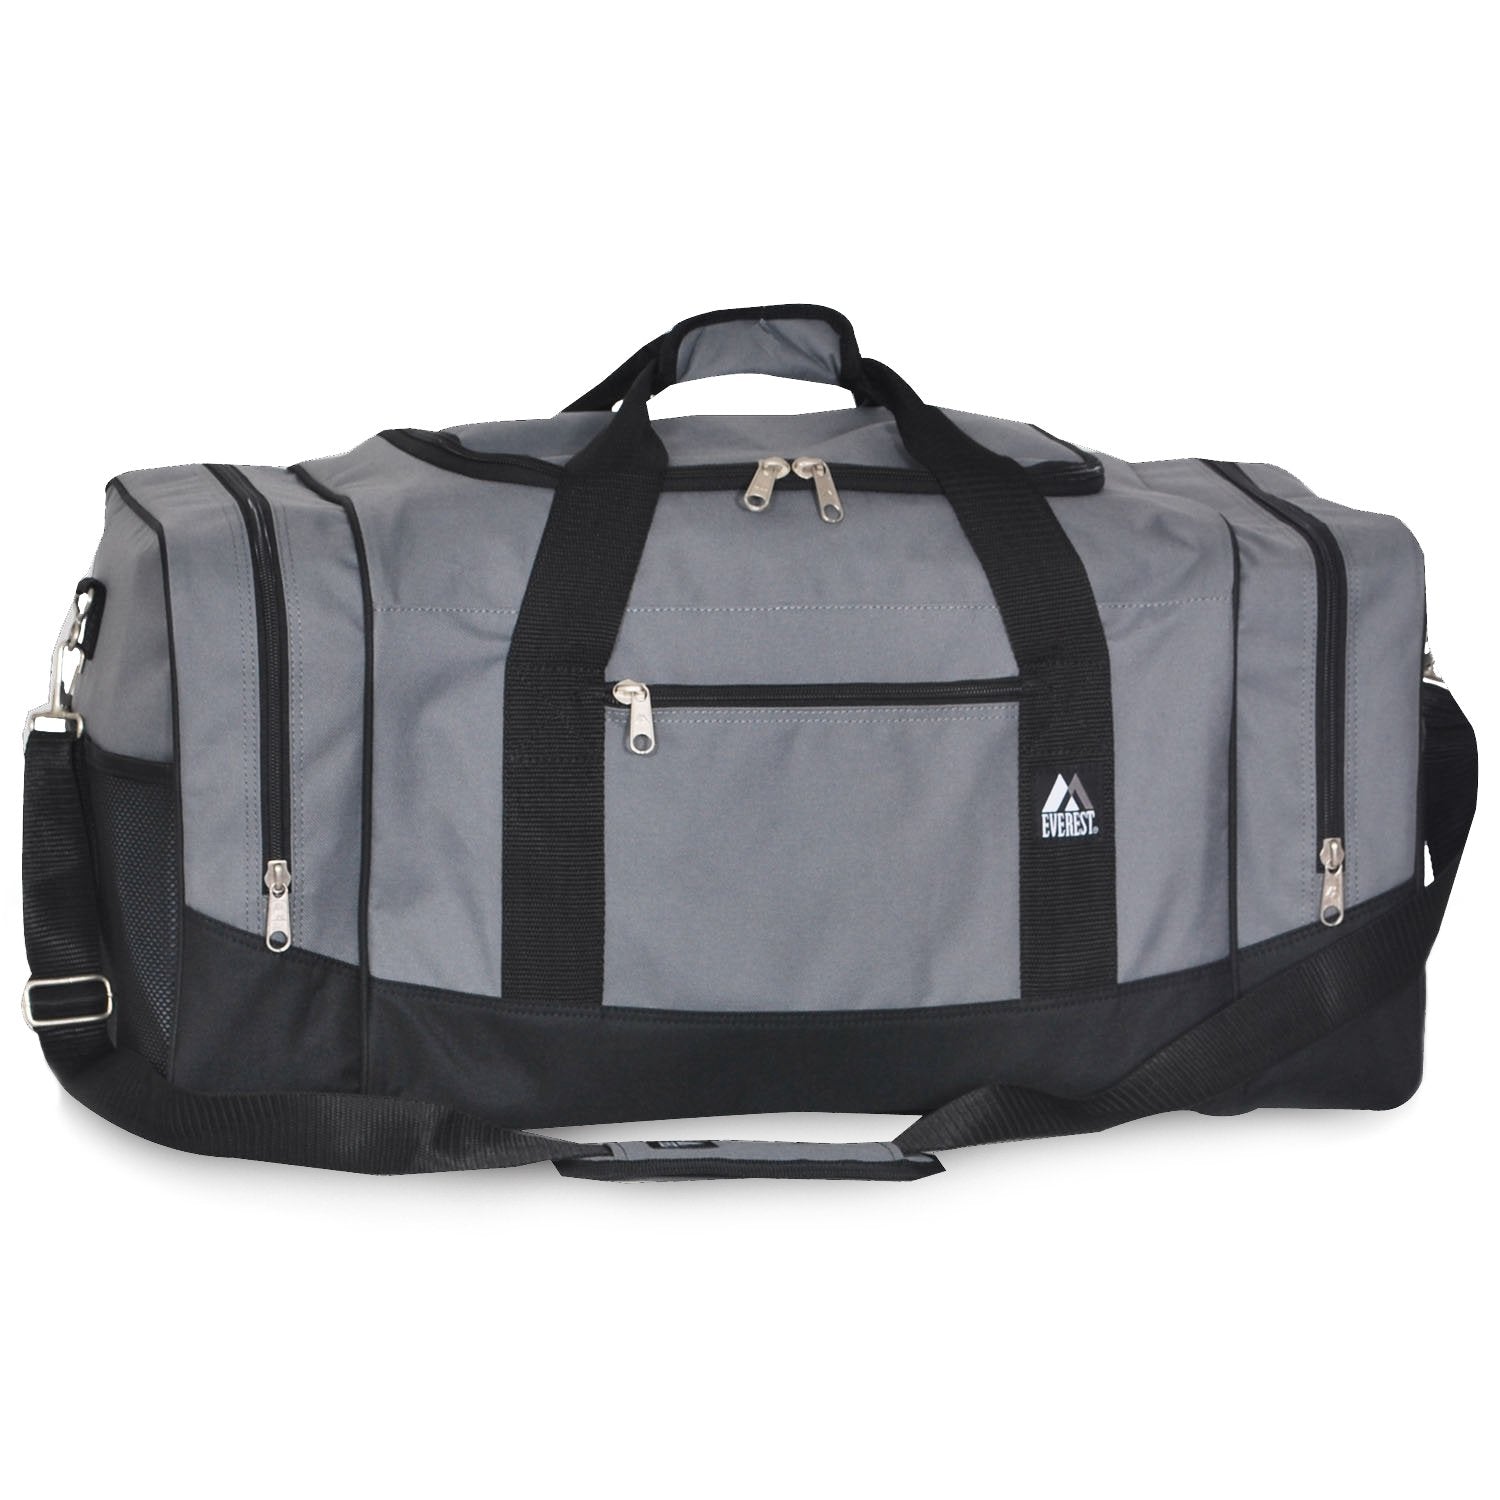 Everest-Sporty Gear Bag